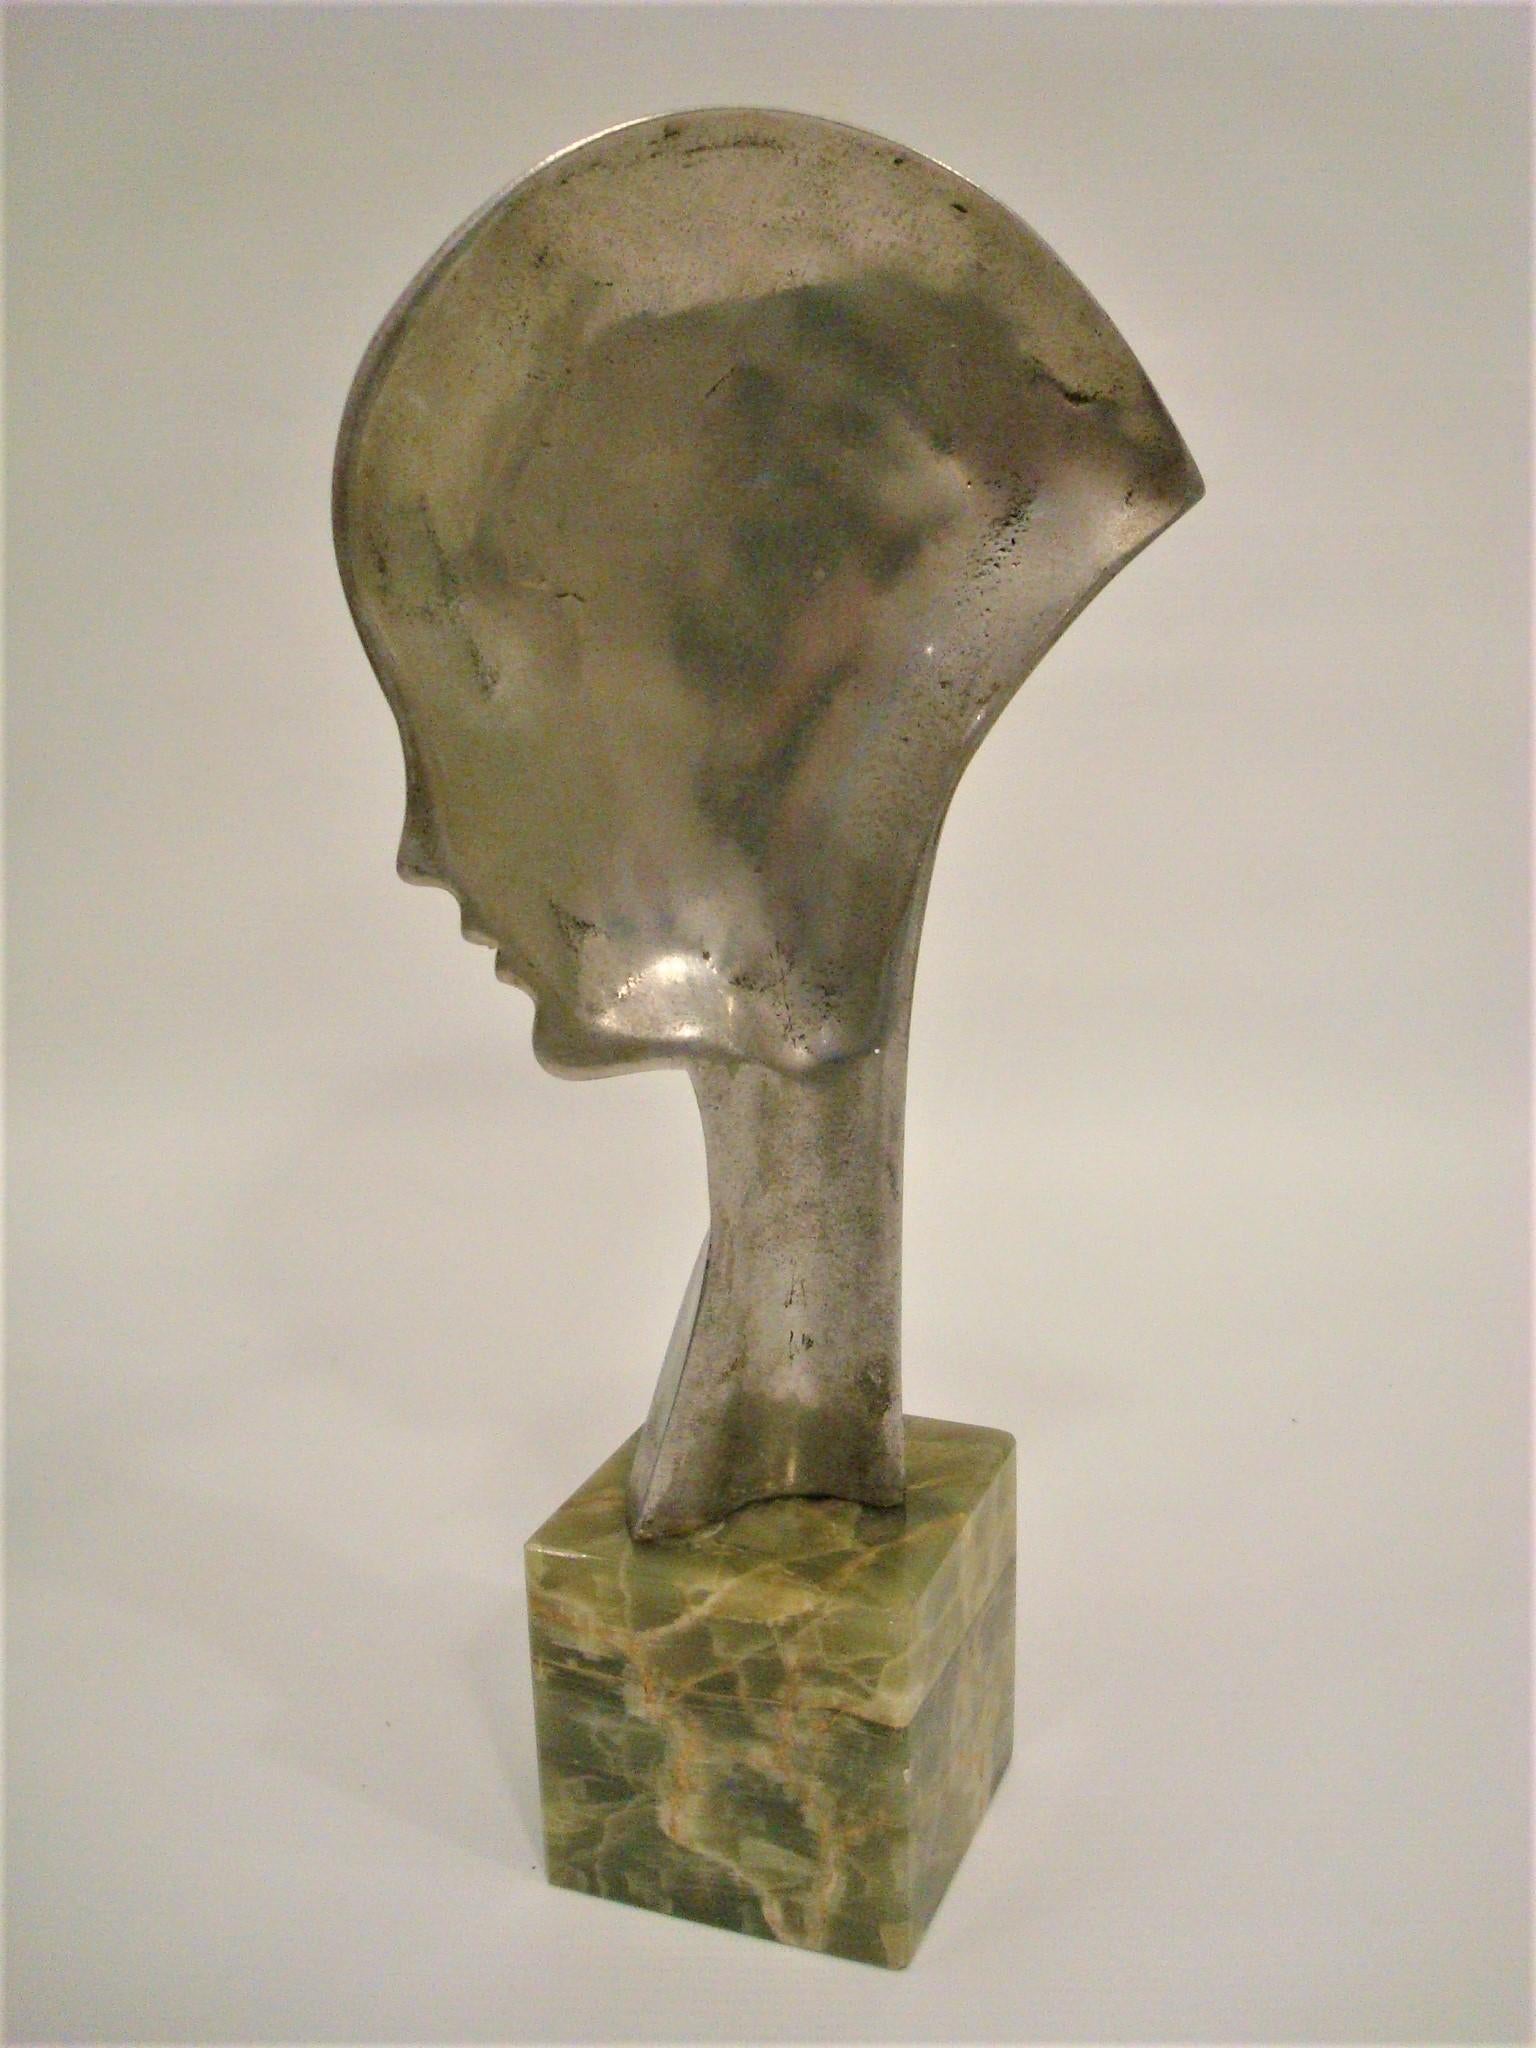 Silvered Art Deco Bronze Sculpture Bust Woman Profile Guido Cacciapuoti 1930 For Sale